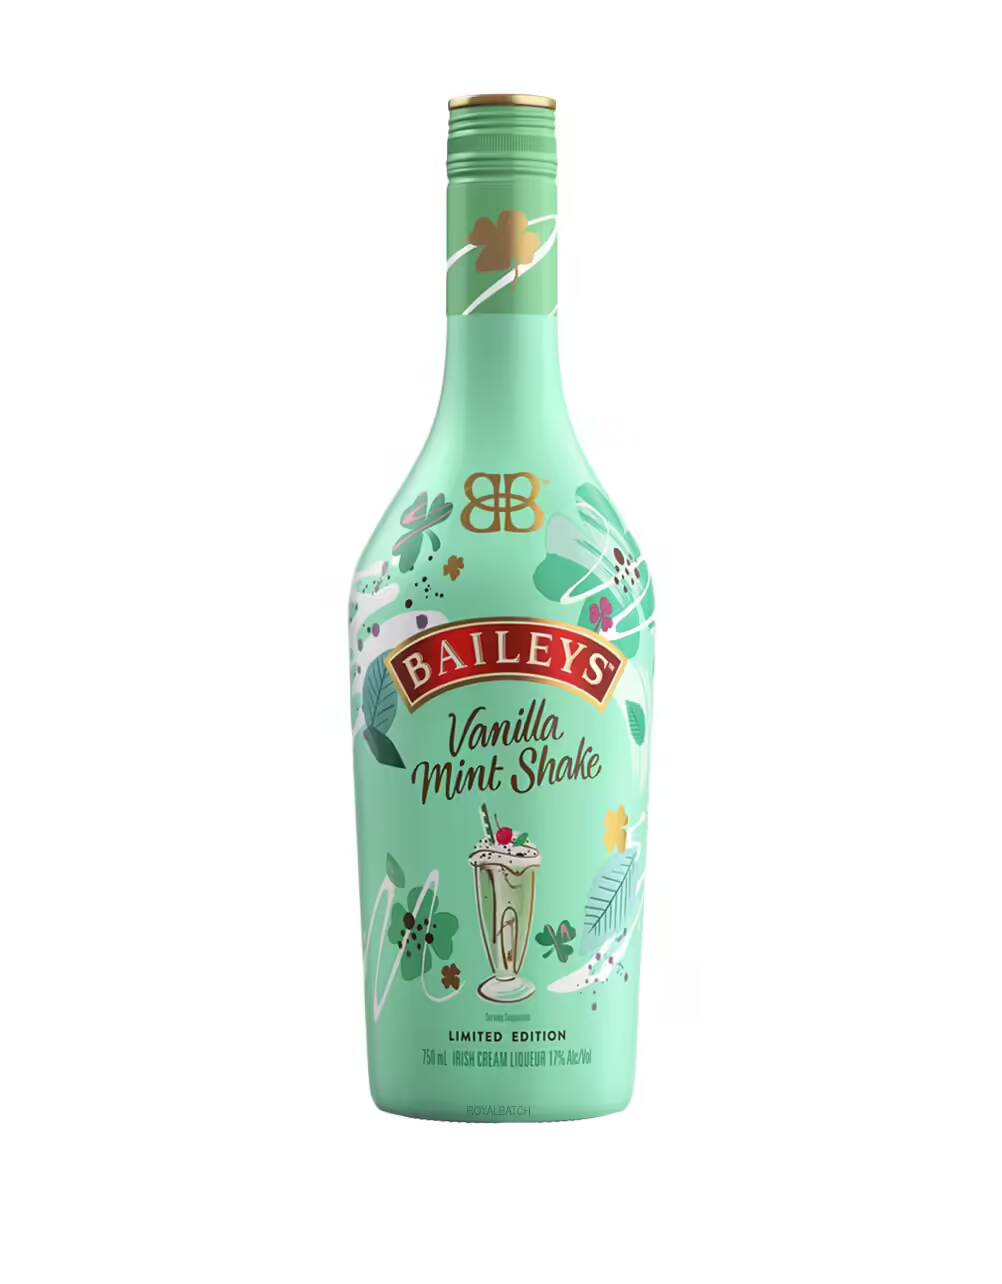 Baileys Vanilla Mint Shake Limited Edition Irish Cream Liqueur